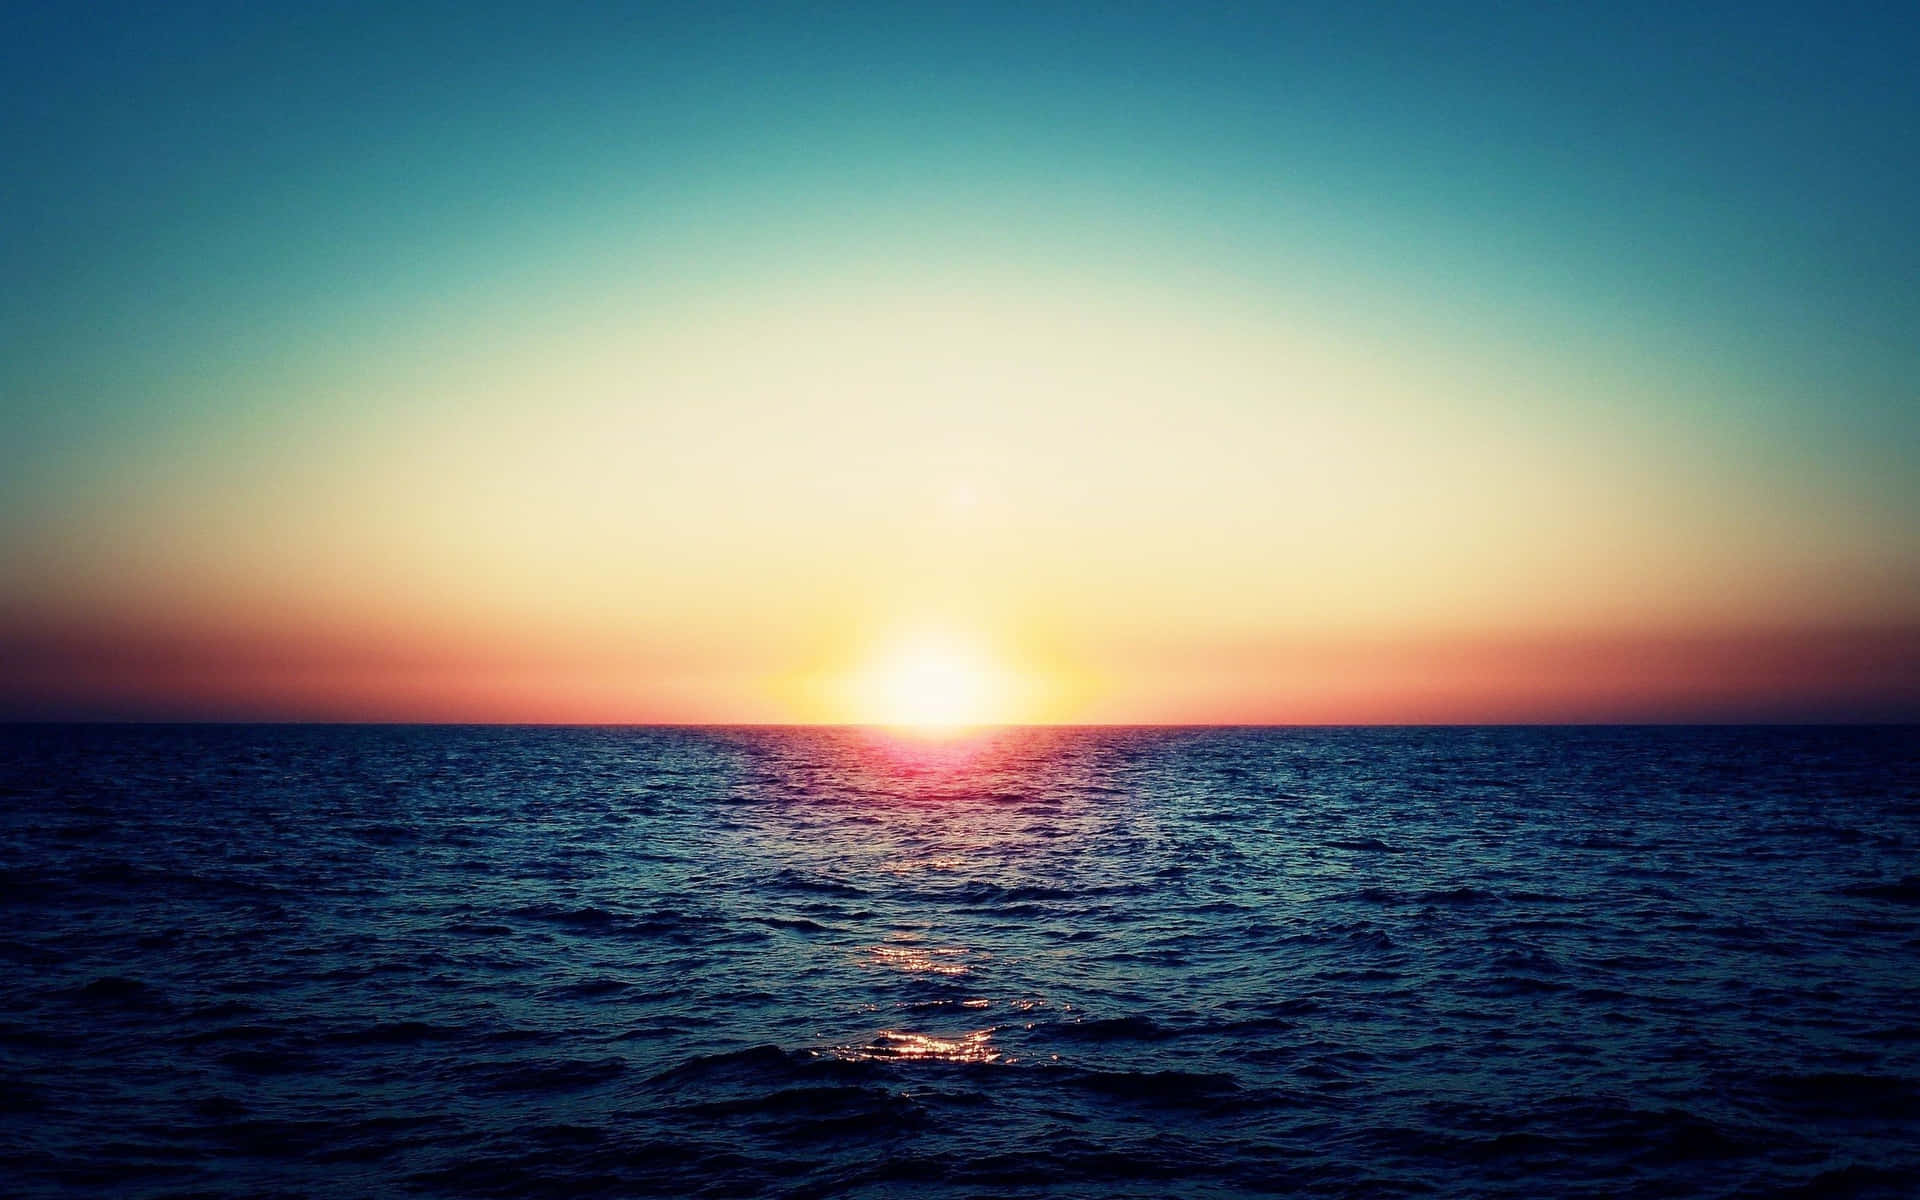 Tranquil Sunset Over a Vast Ocean